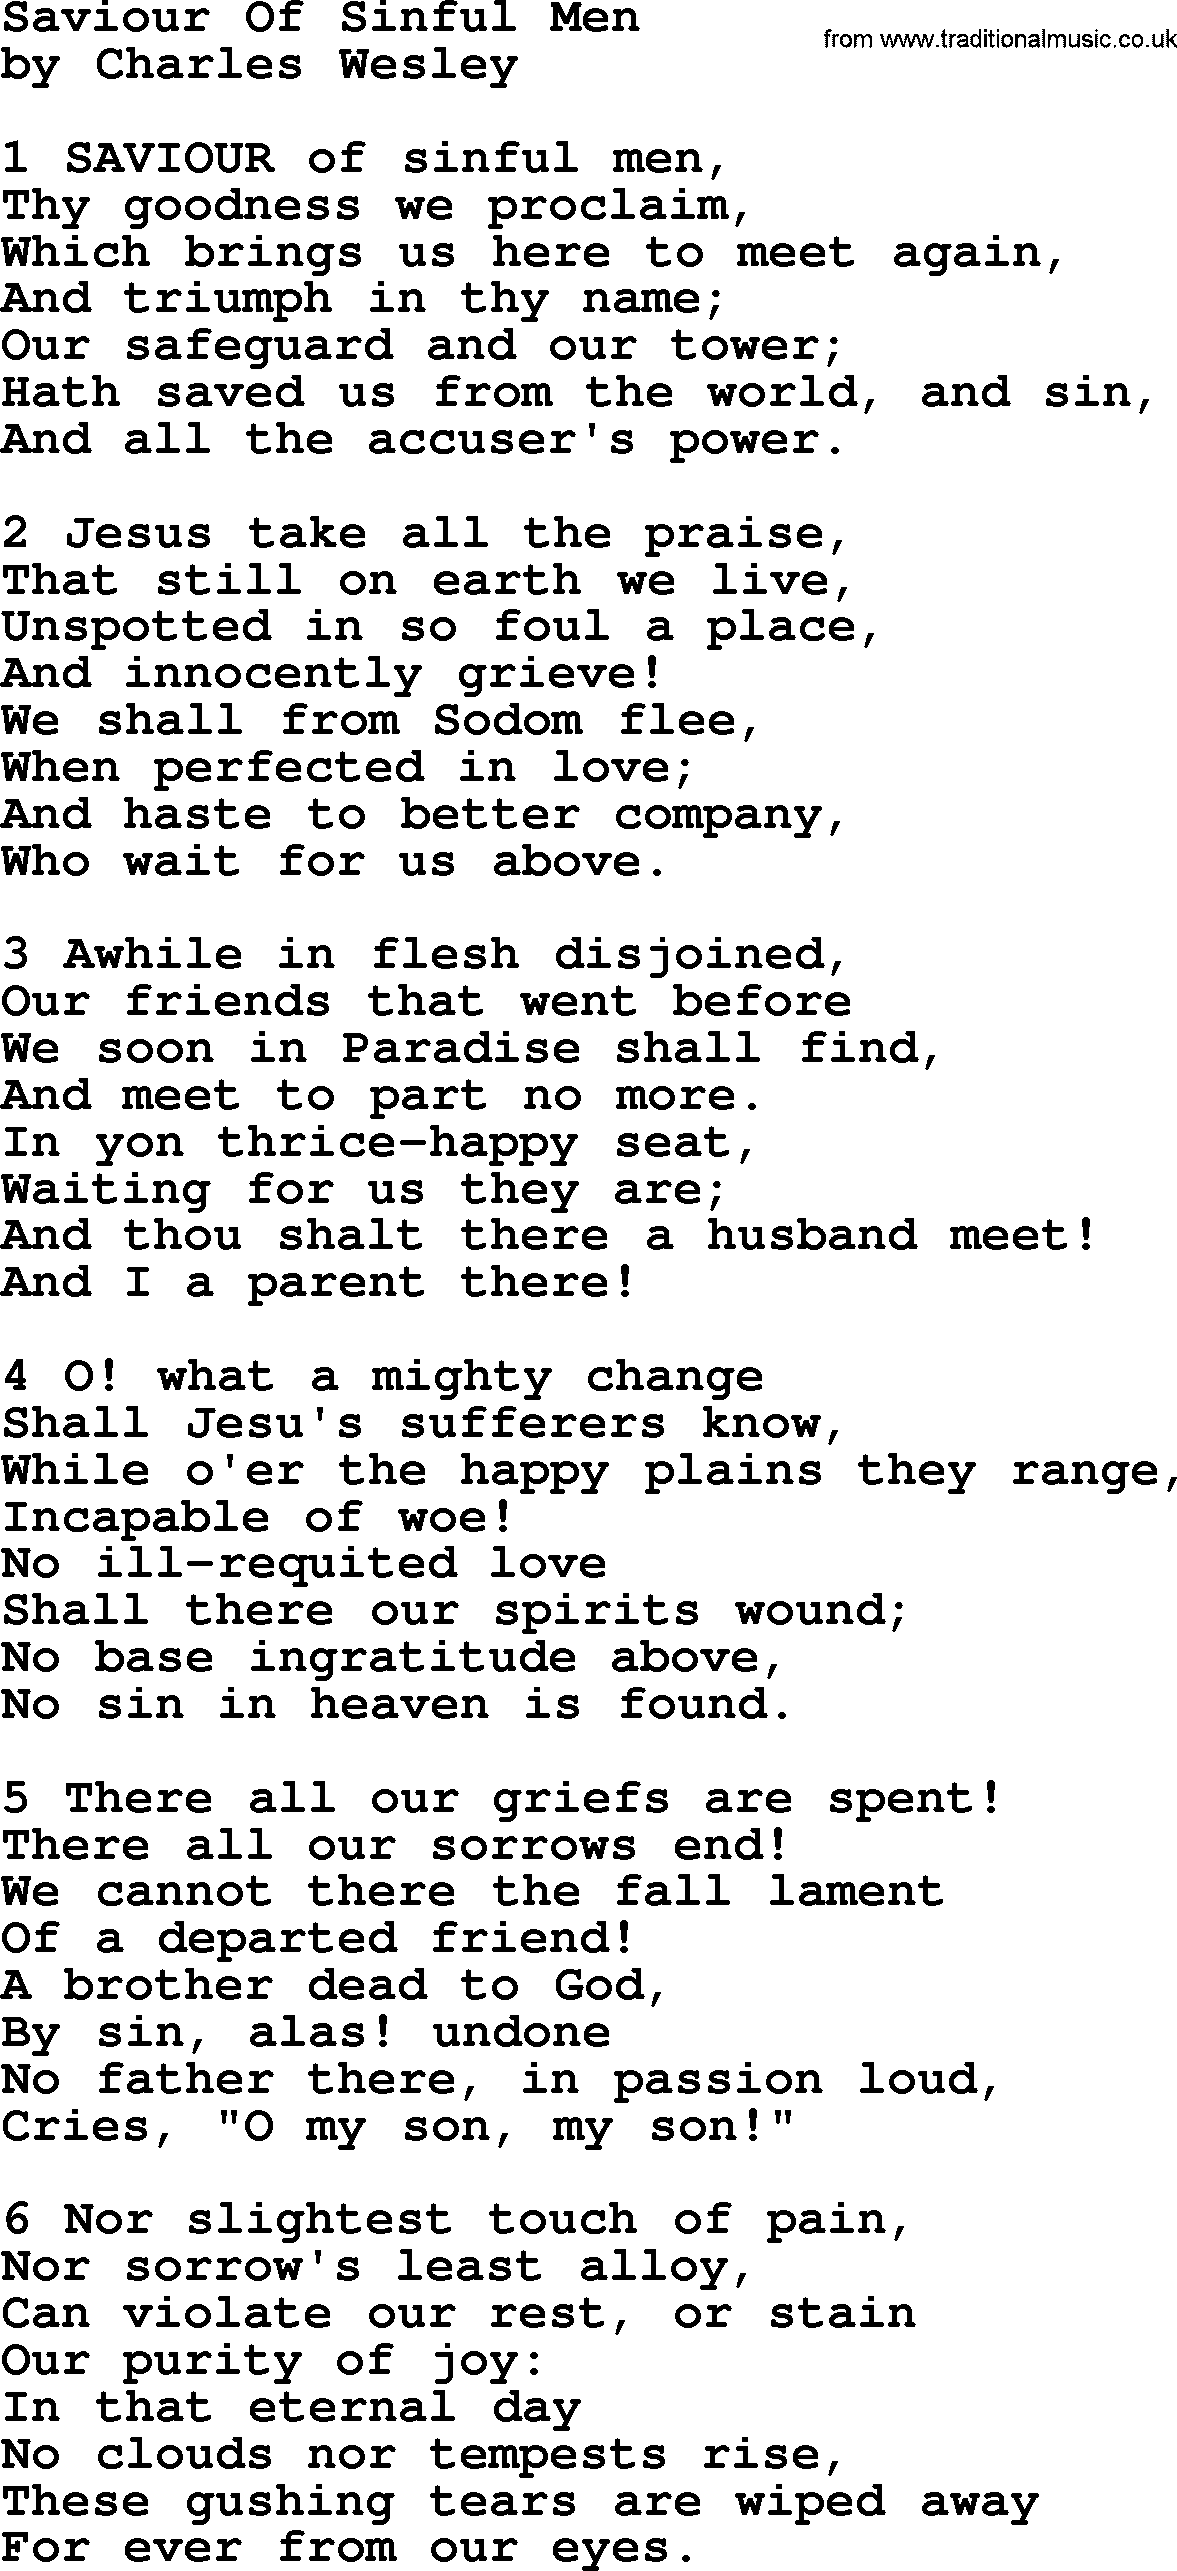 Charles Wesley hymn: Saviour Of Sinful Men, lyrics